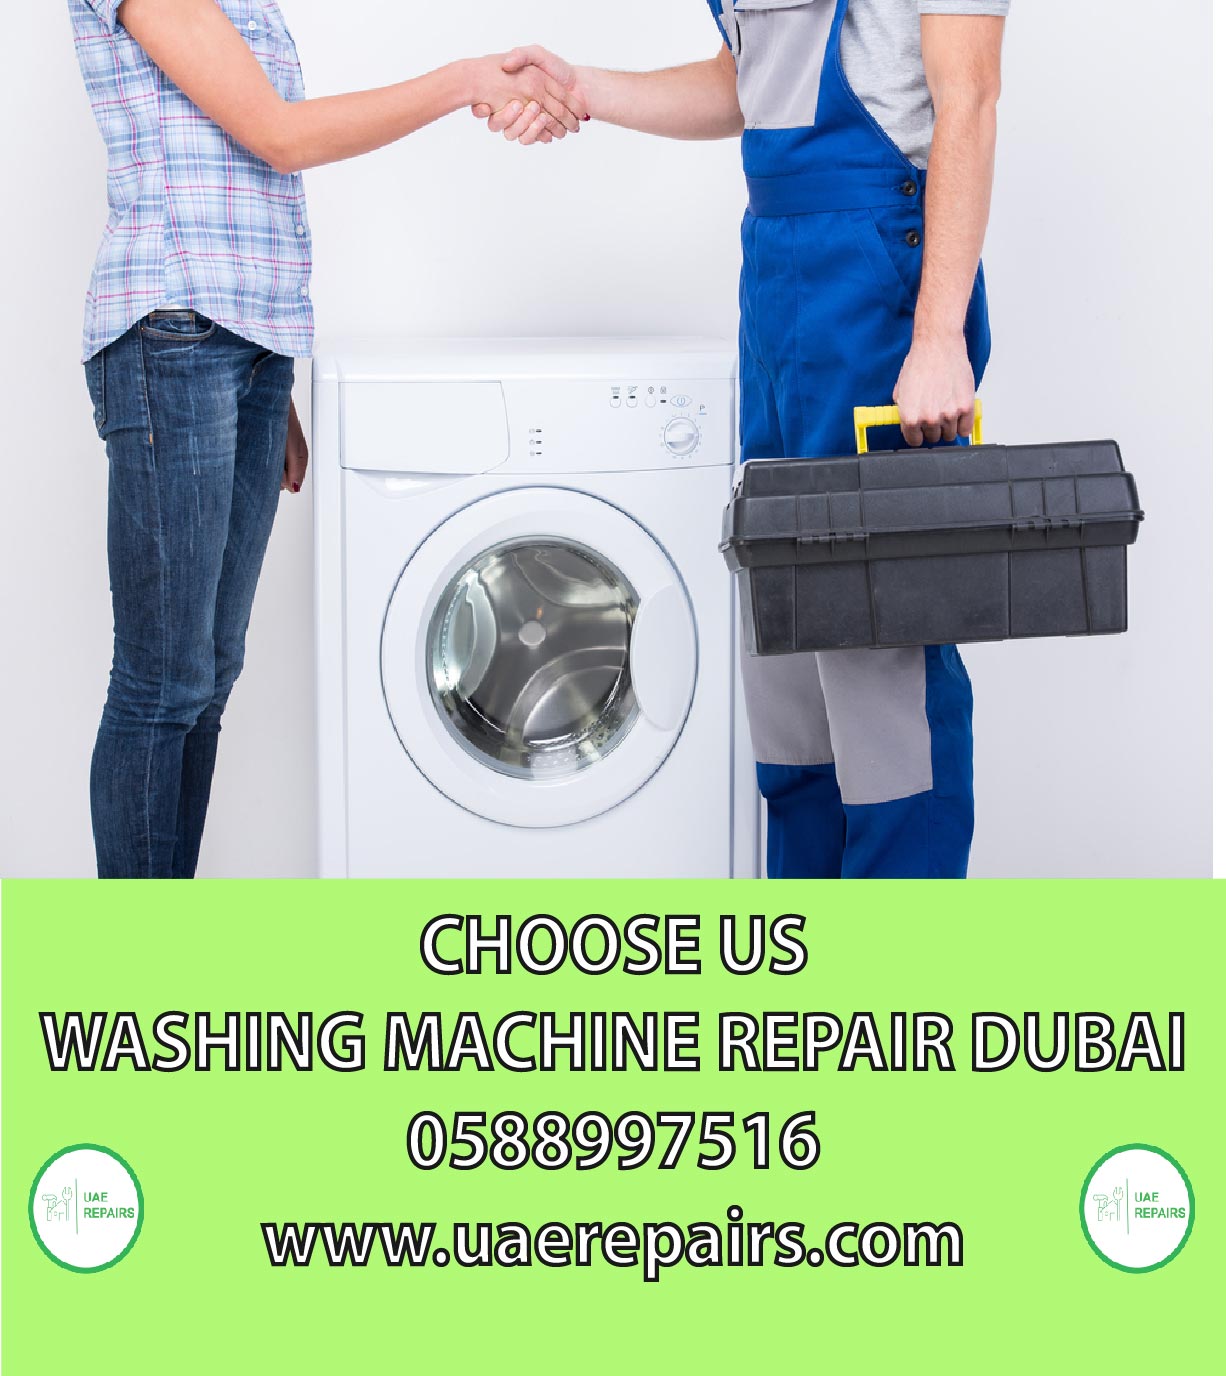 CHOOSE UAE REPAIRS FOR WASHING MACHINE REPAIR DUBAI 0588997516